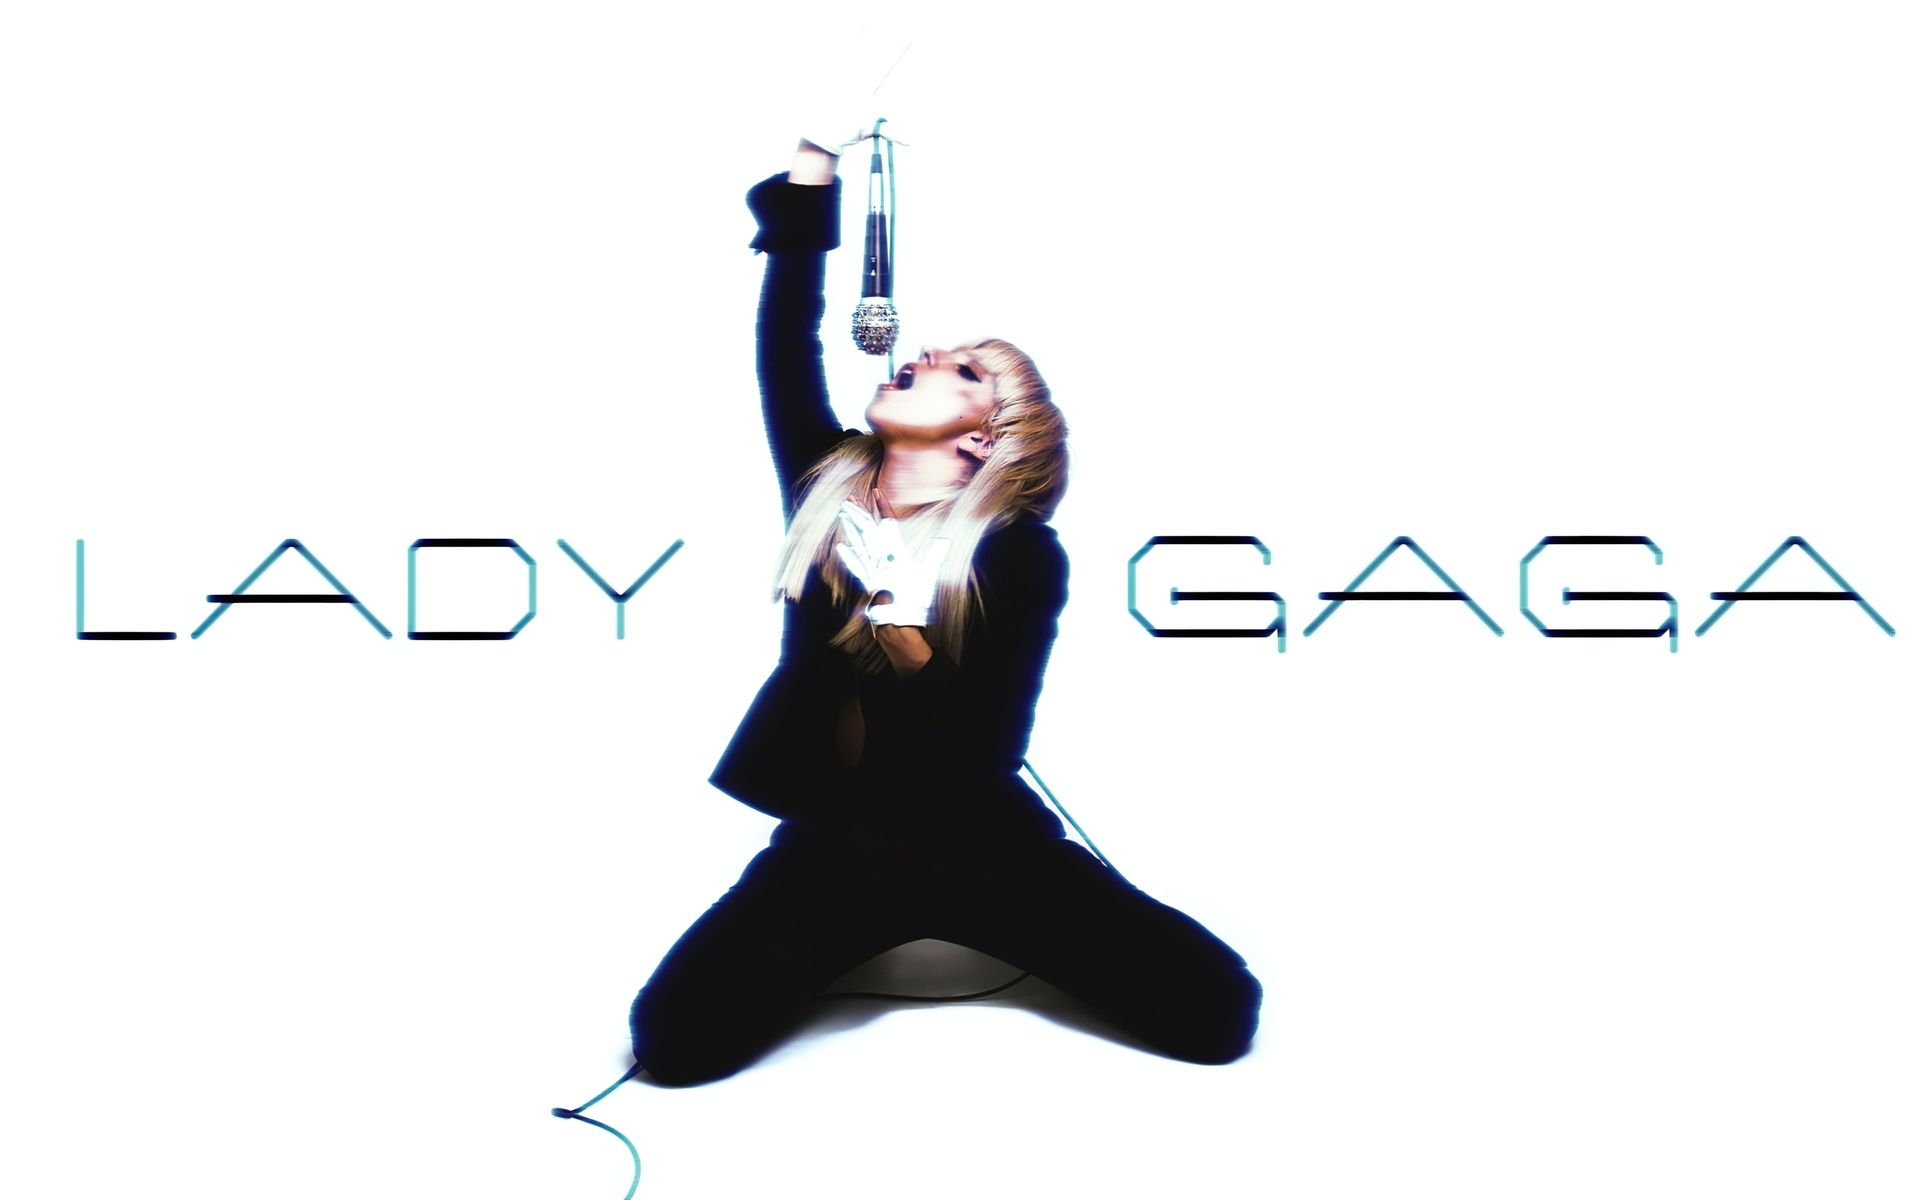 Леди гага на английском. Леди Гага обои. Леди Гага обои на рабочий стол. Lady Gaga логотип. Леди Гага фотосессии.